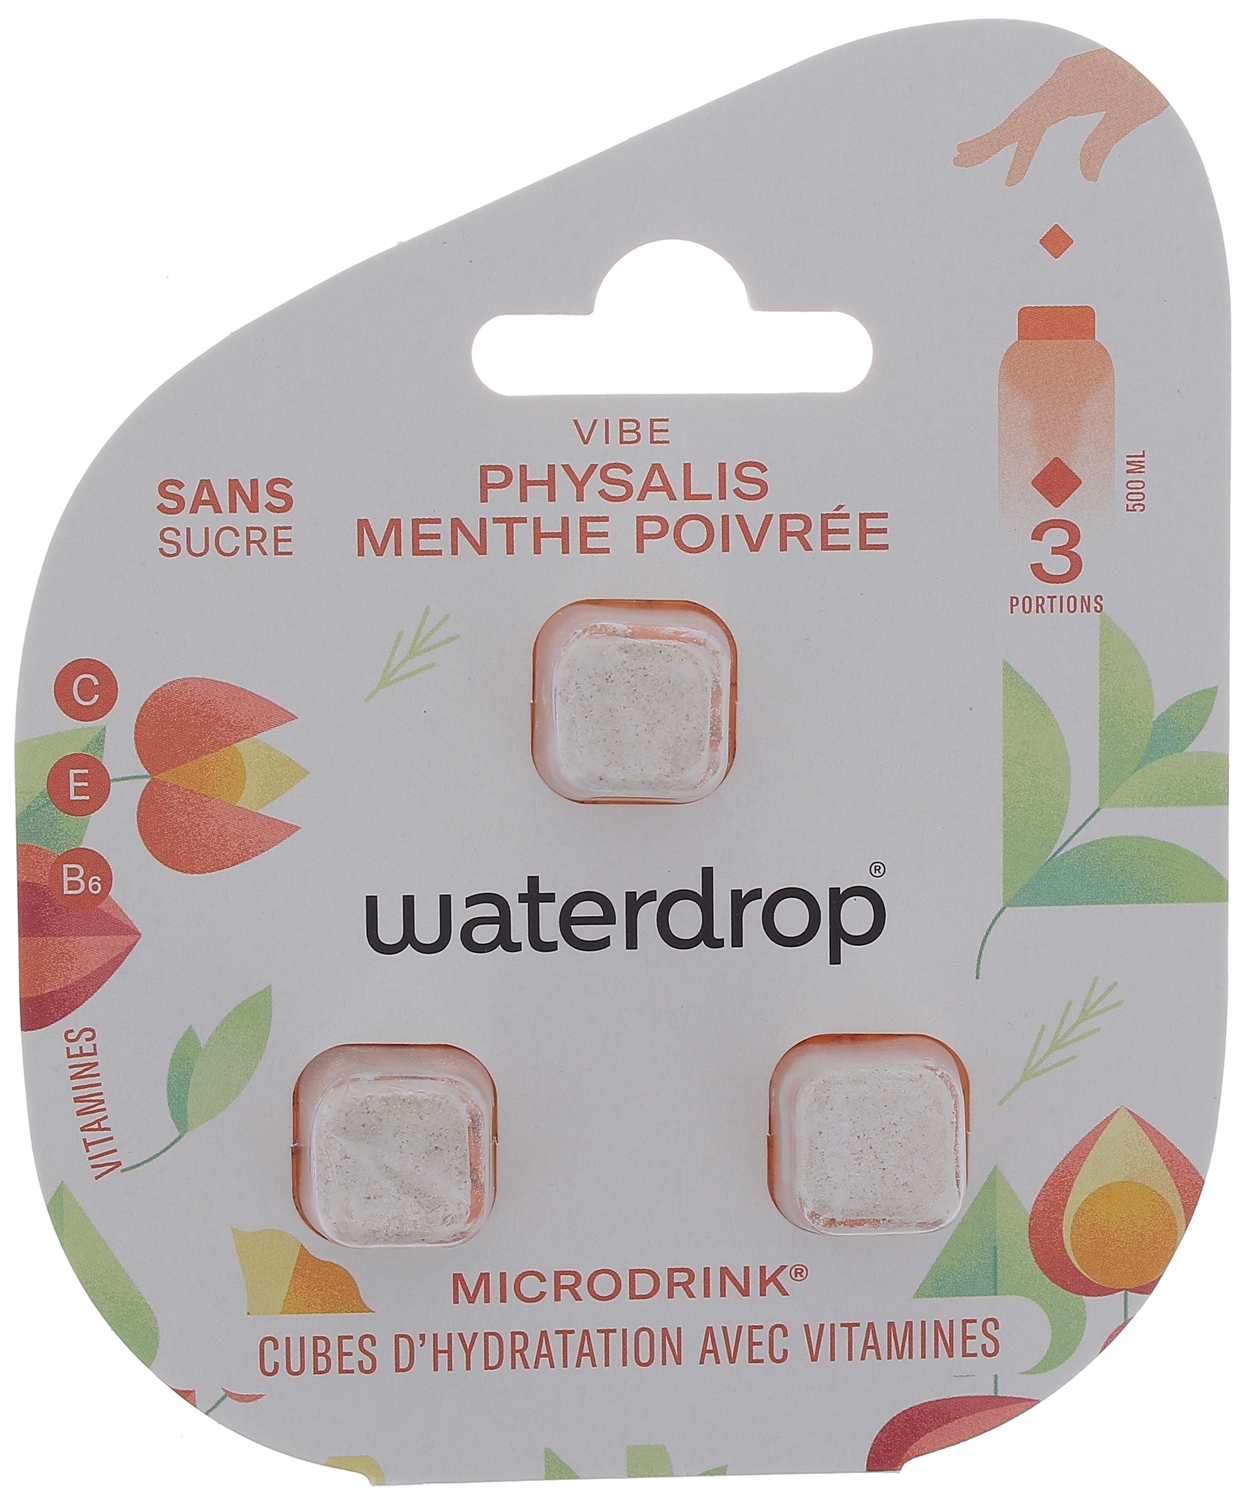 Microdrink Vibe Waterdrop - cubes d'hydratation avec vitamines